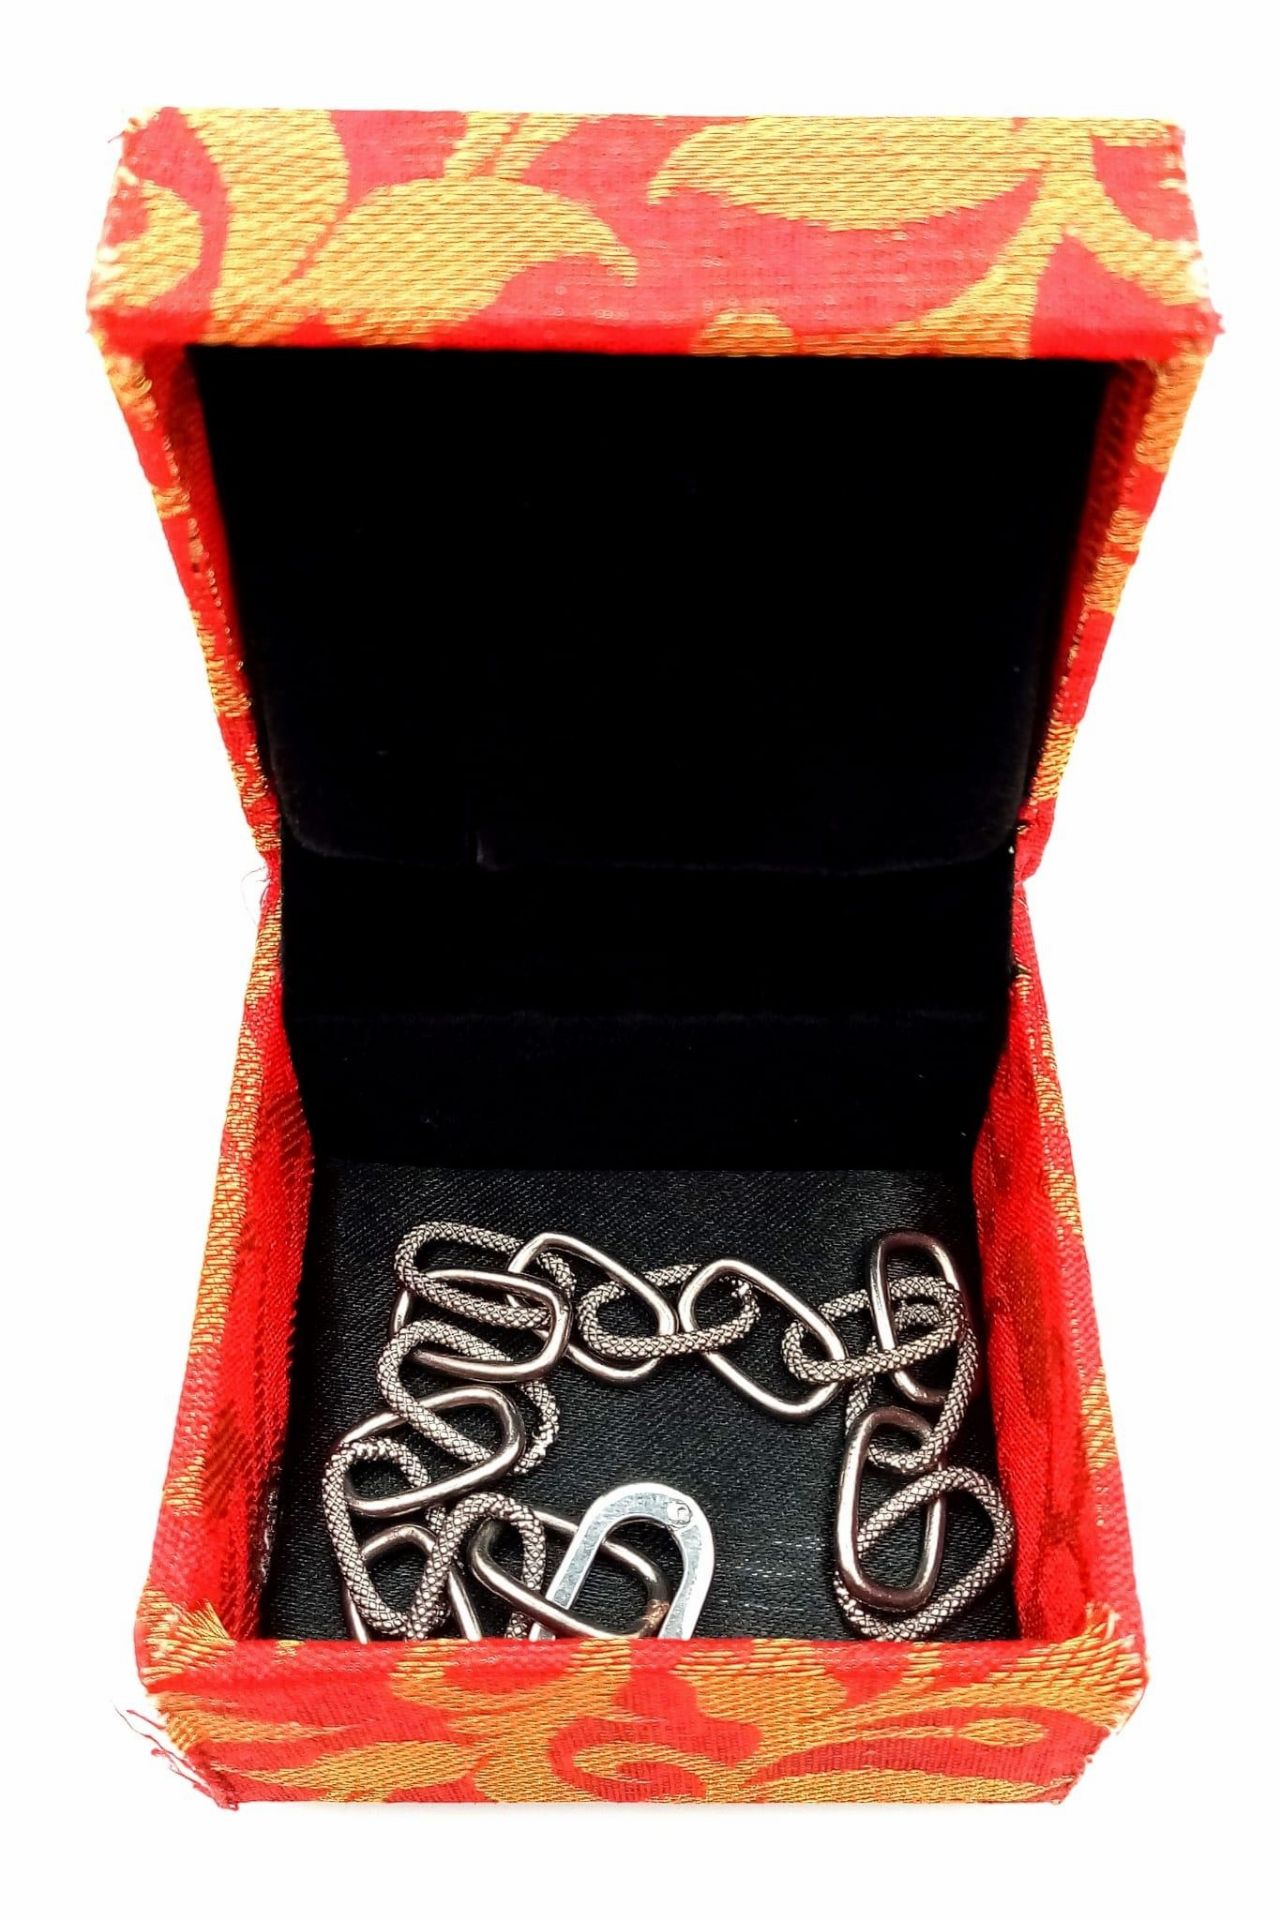 A 925 Silver Elongated Link Bracelet. Weight - 13.5 gm. 18cm. Comes with a presentation case. Ref: - Bild 4 aus 4